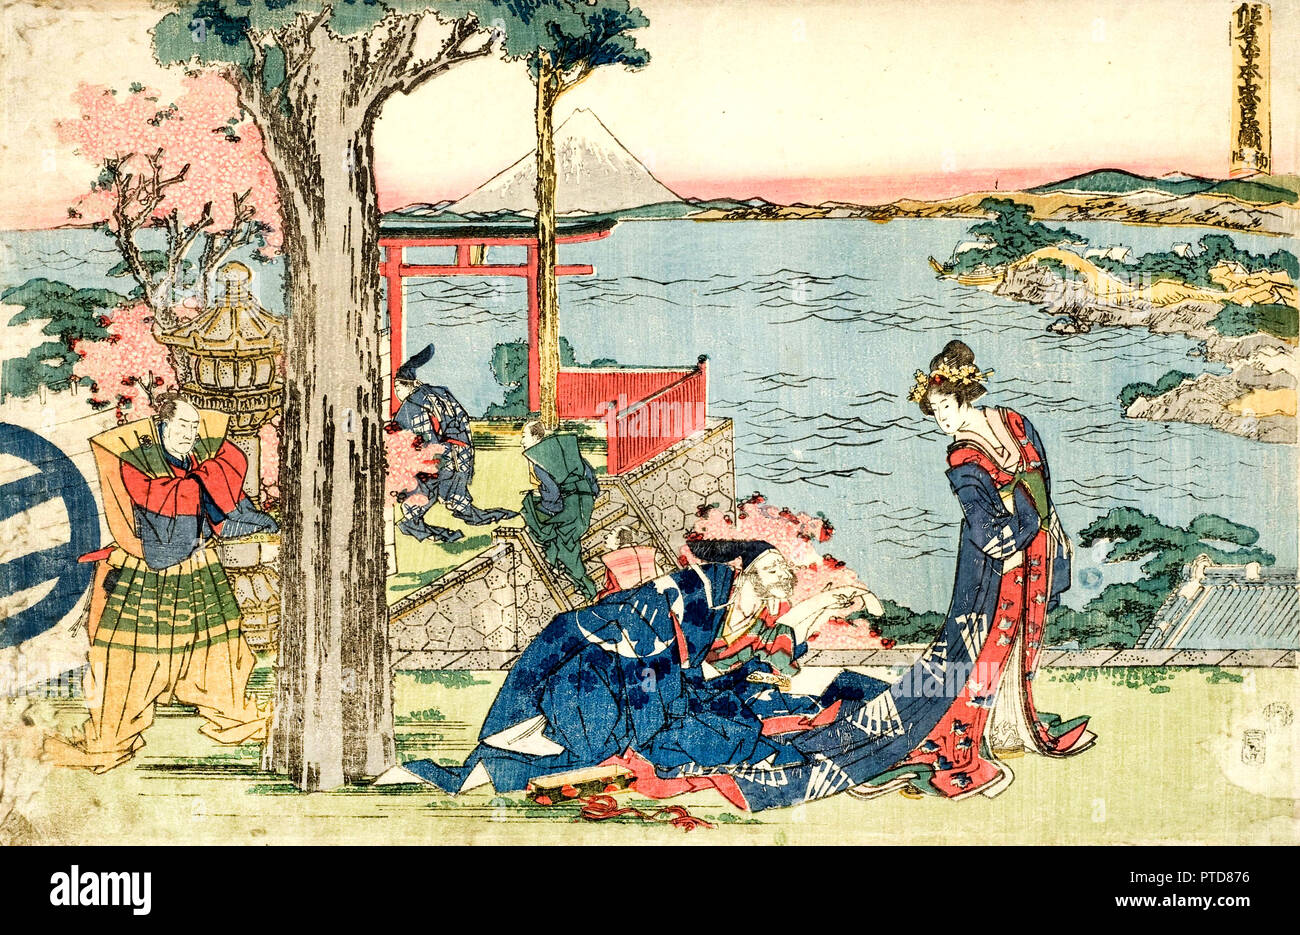 Katsushika Hokusai, Holzschnitt 1806 Farb Holzschnitt, der Nationalen Museen der Welt Kultur, Stockholm, Schweden. Stockfoto